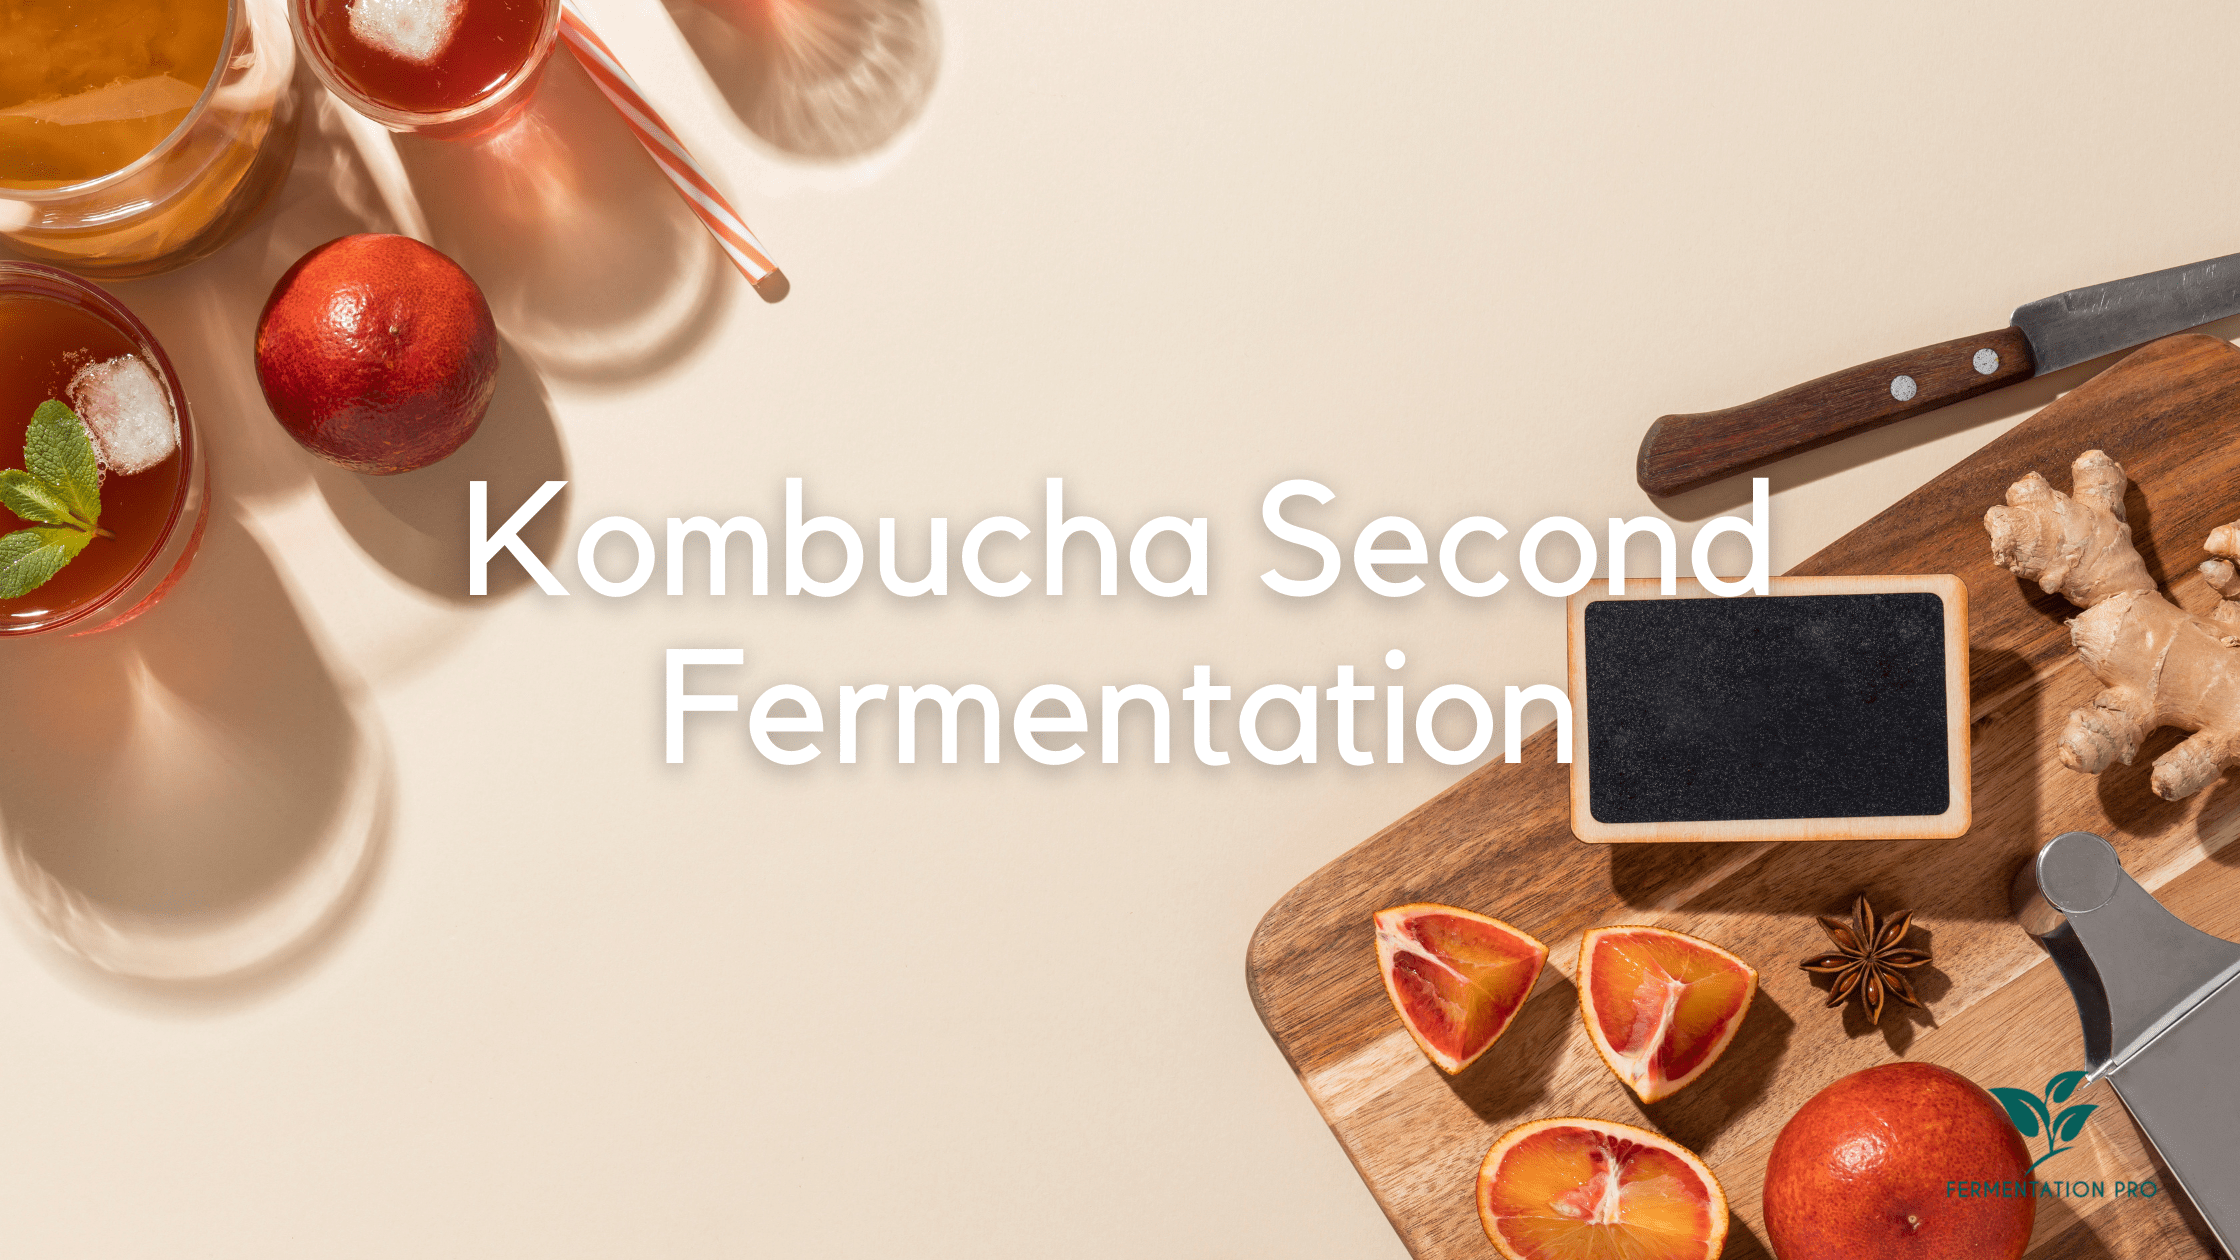 Xxx Seel Brokan Bargin Fsat Time - Kombucha Second Fermentation - Fermentation Pro